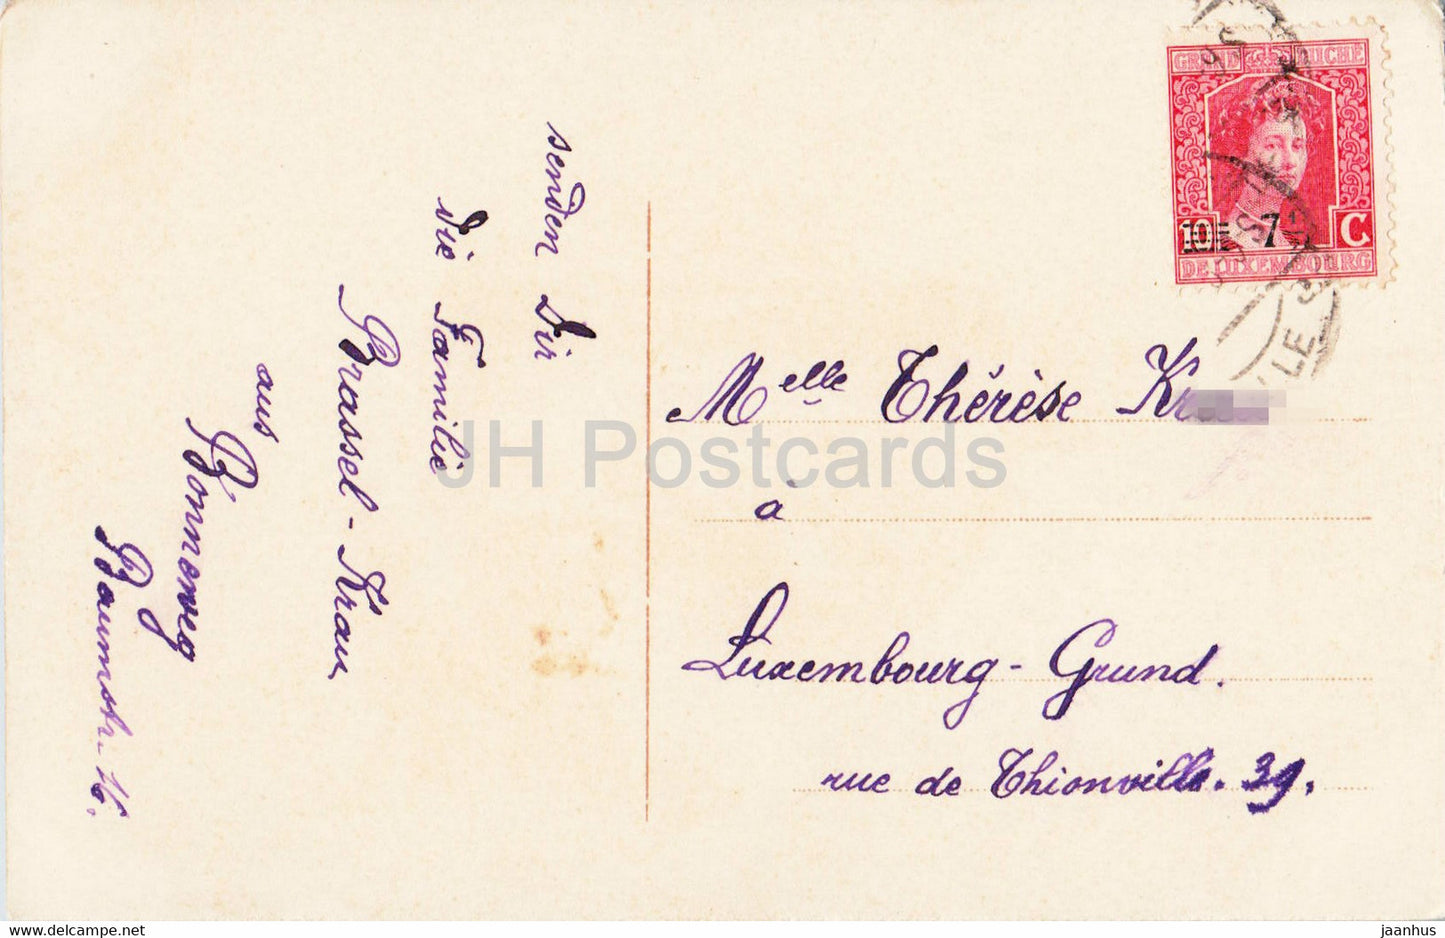 Carte de vœux du Nouvel An - Die besten Gluckwunsche zum neuen Jahre - carte postale ancienne - Luxembourg - utilisée